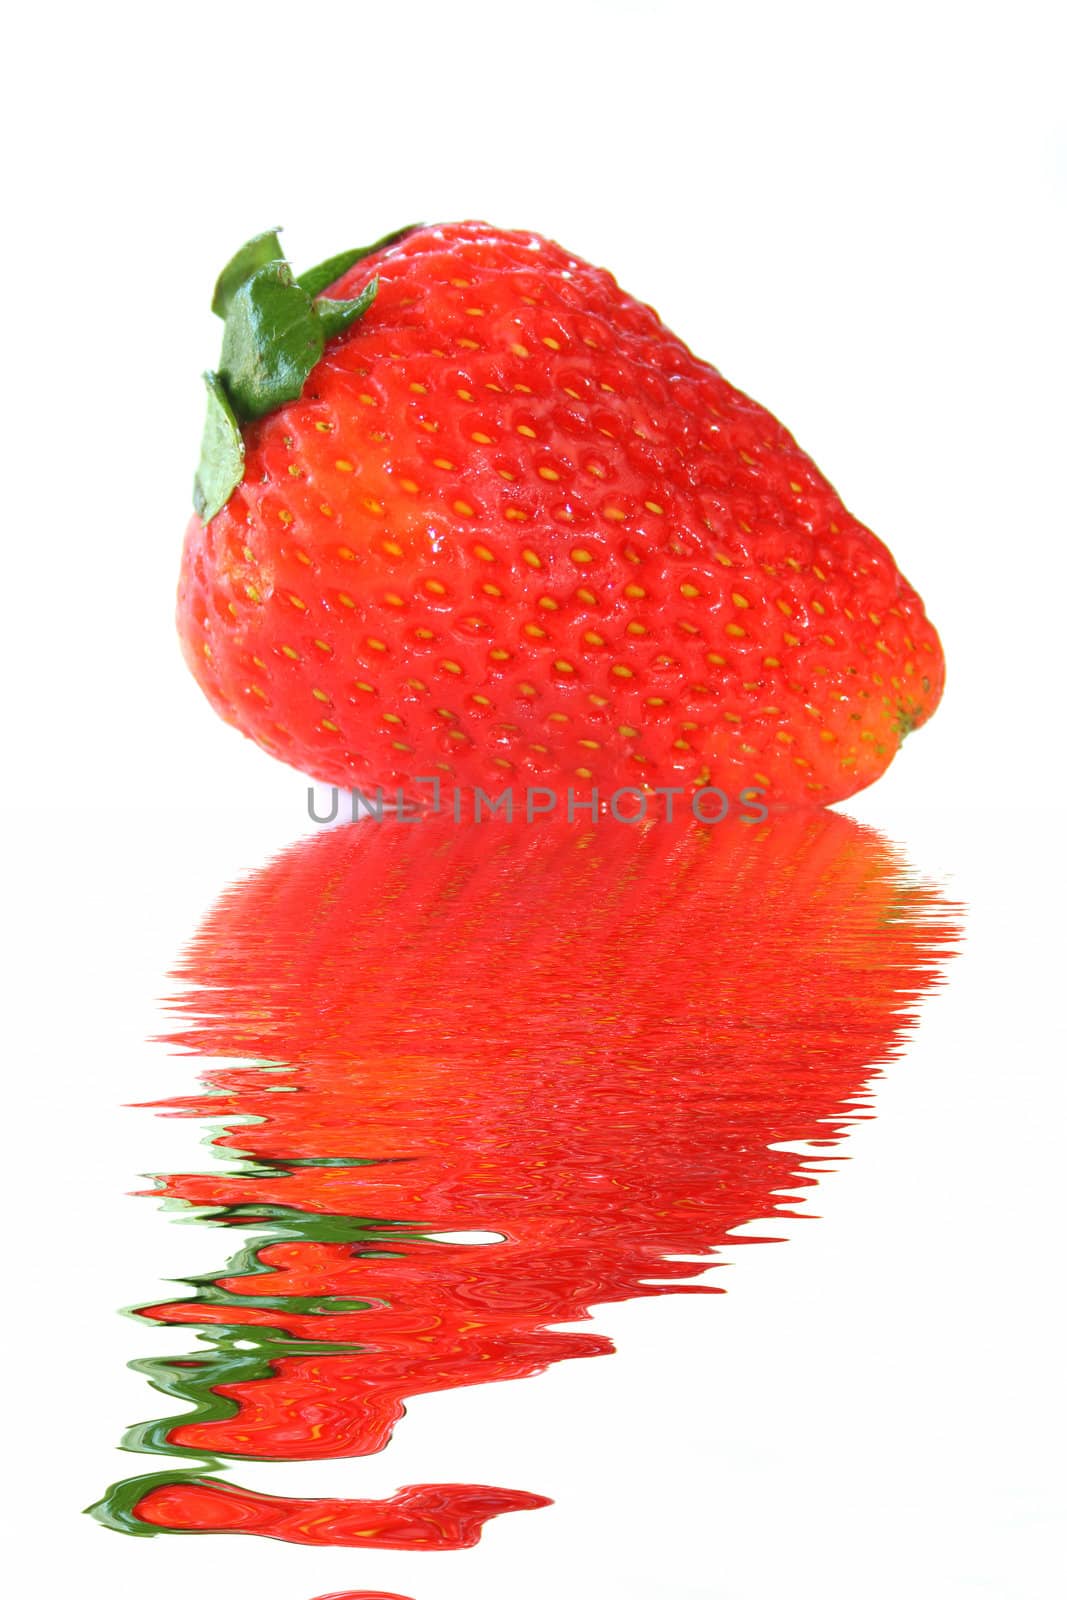 Fresh Strawberry by thephotoguy